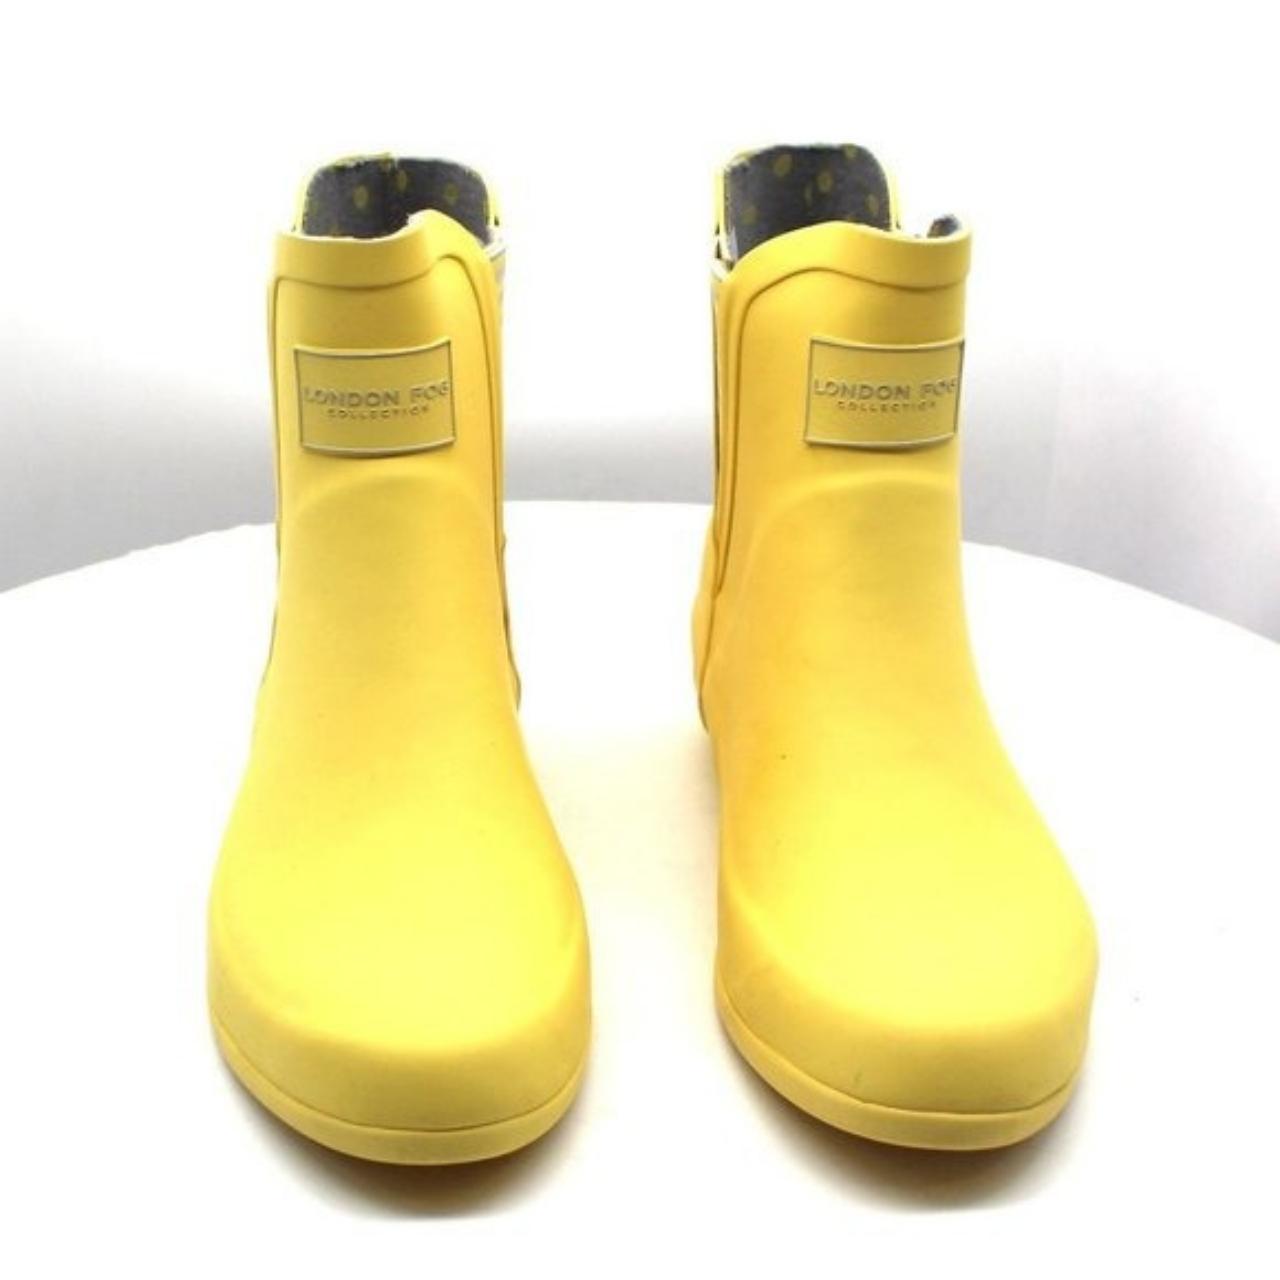 London Fog Women's Yellow Boots (2)